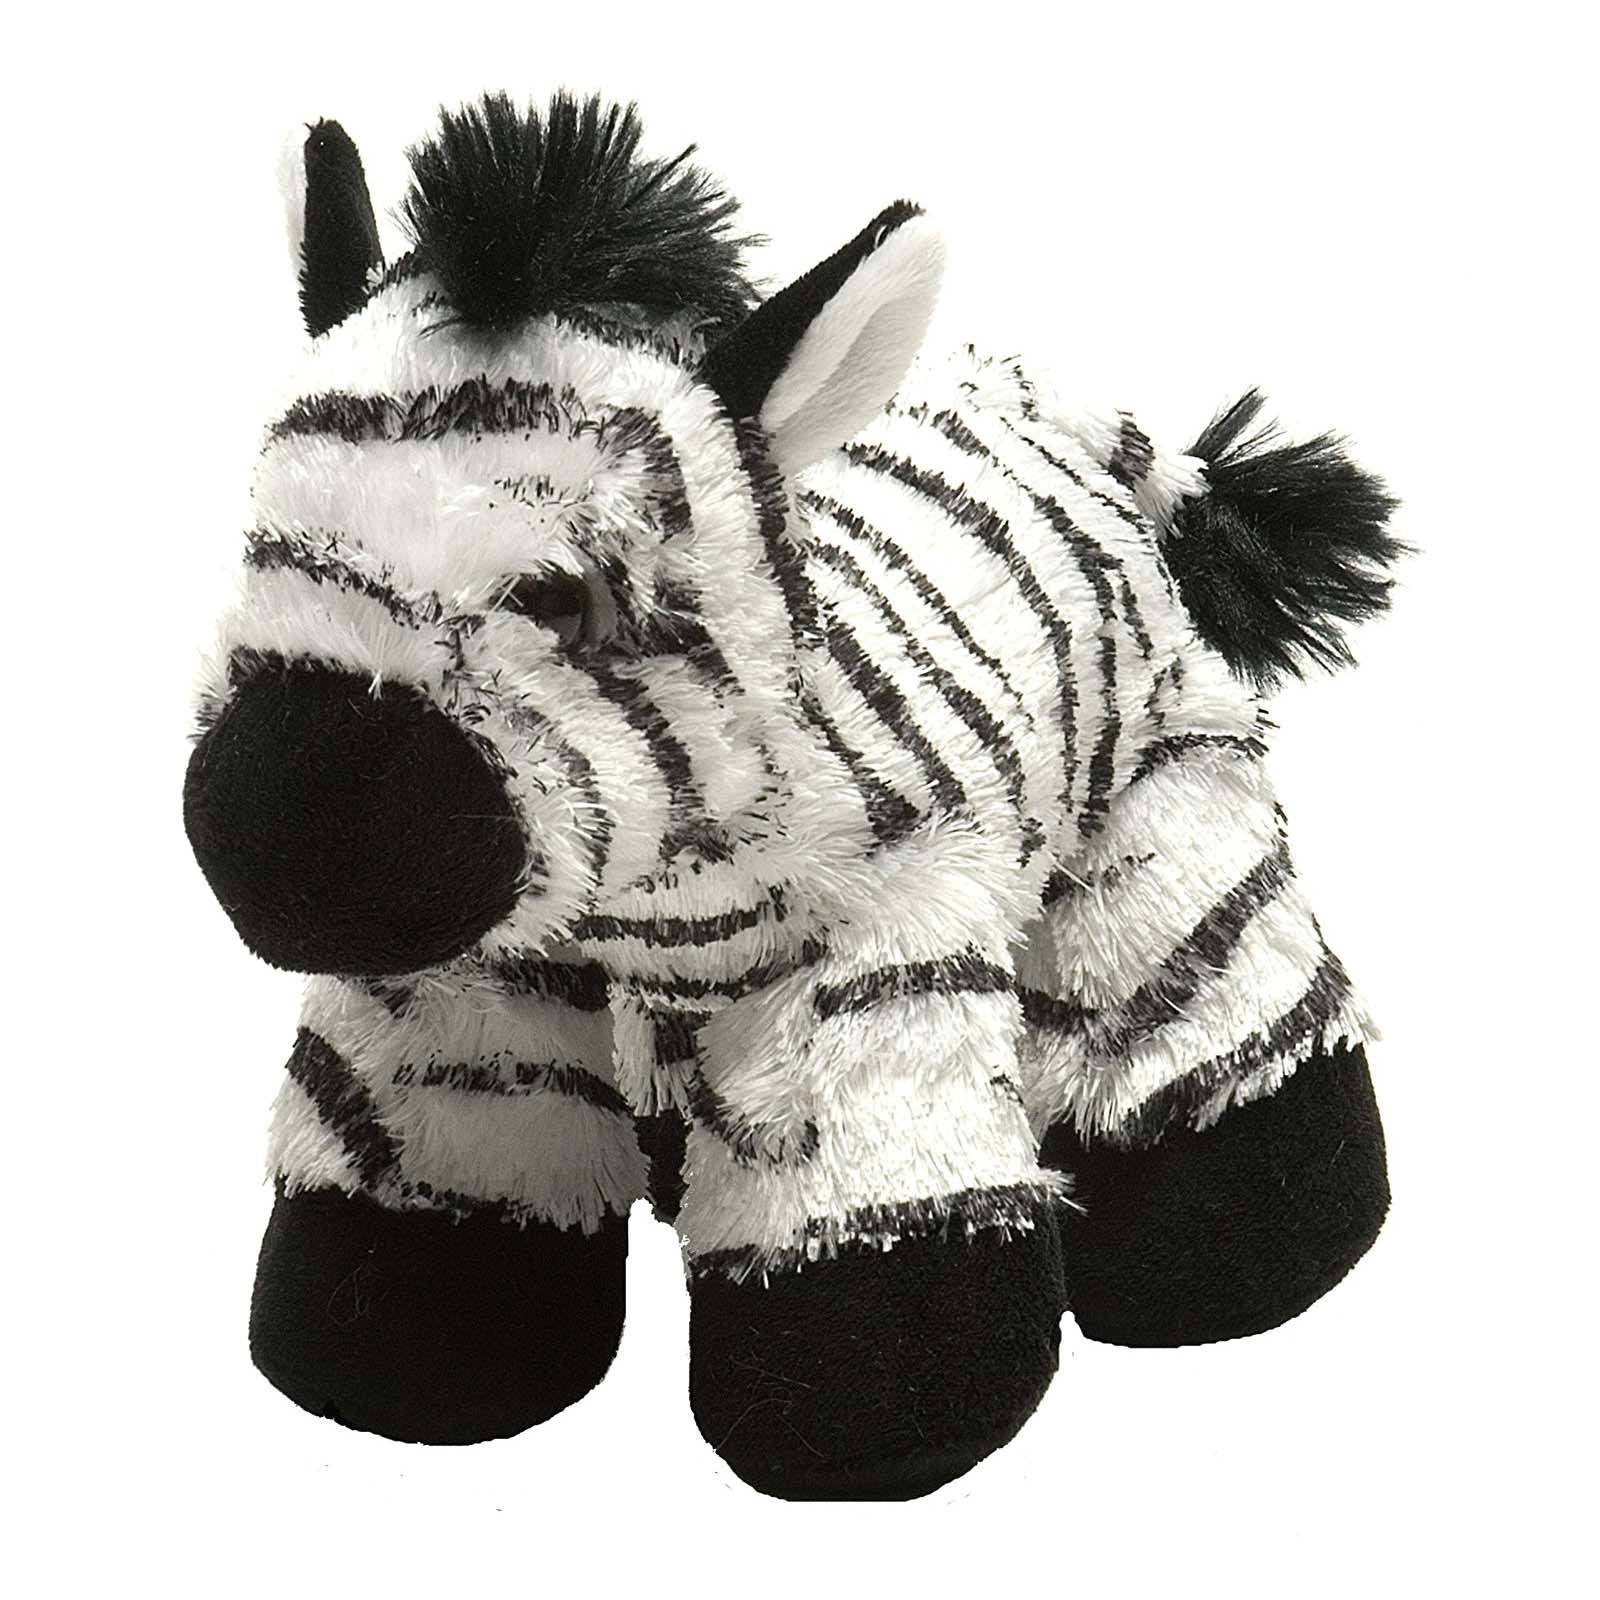 stuffed zebra